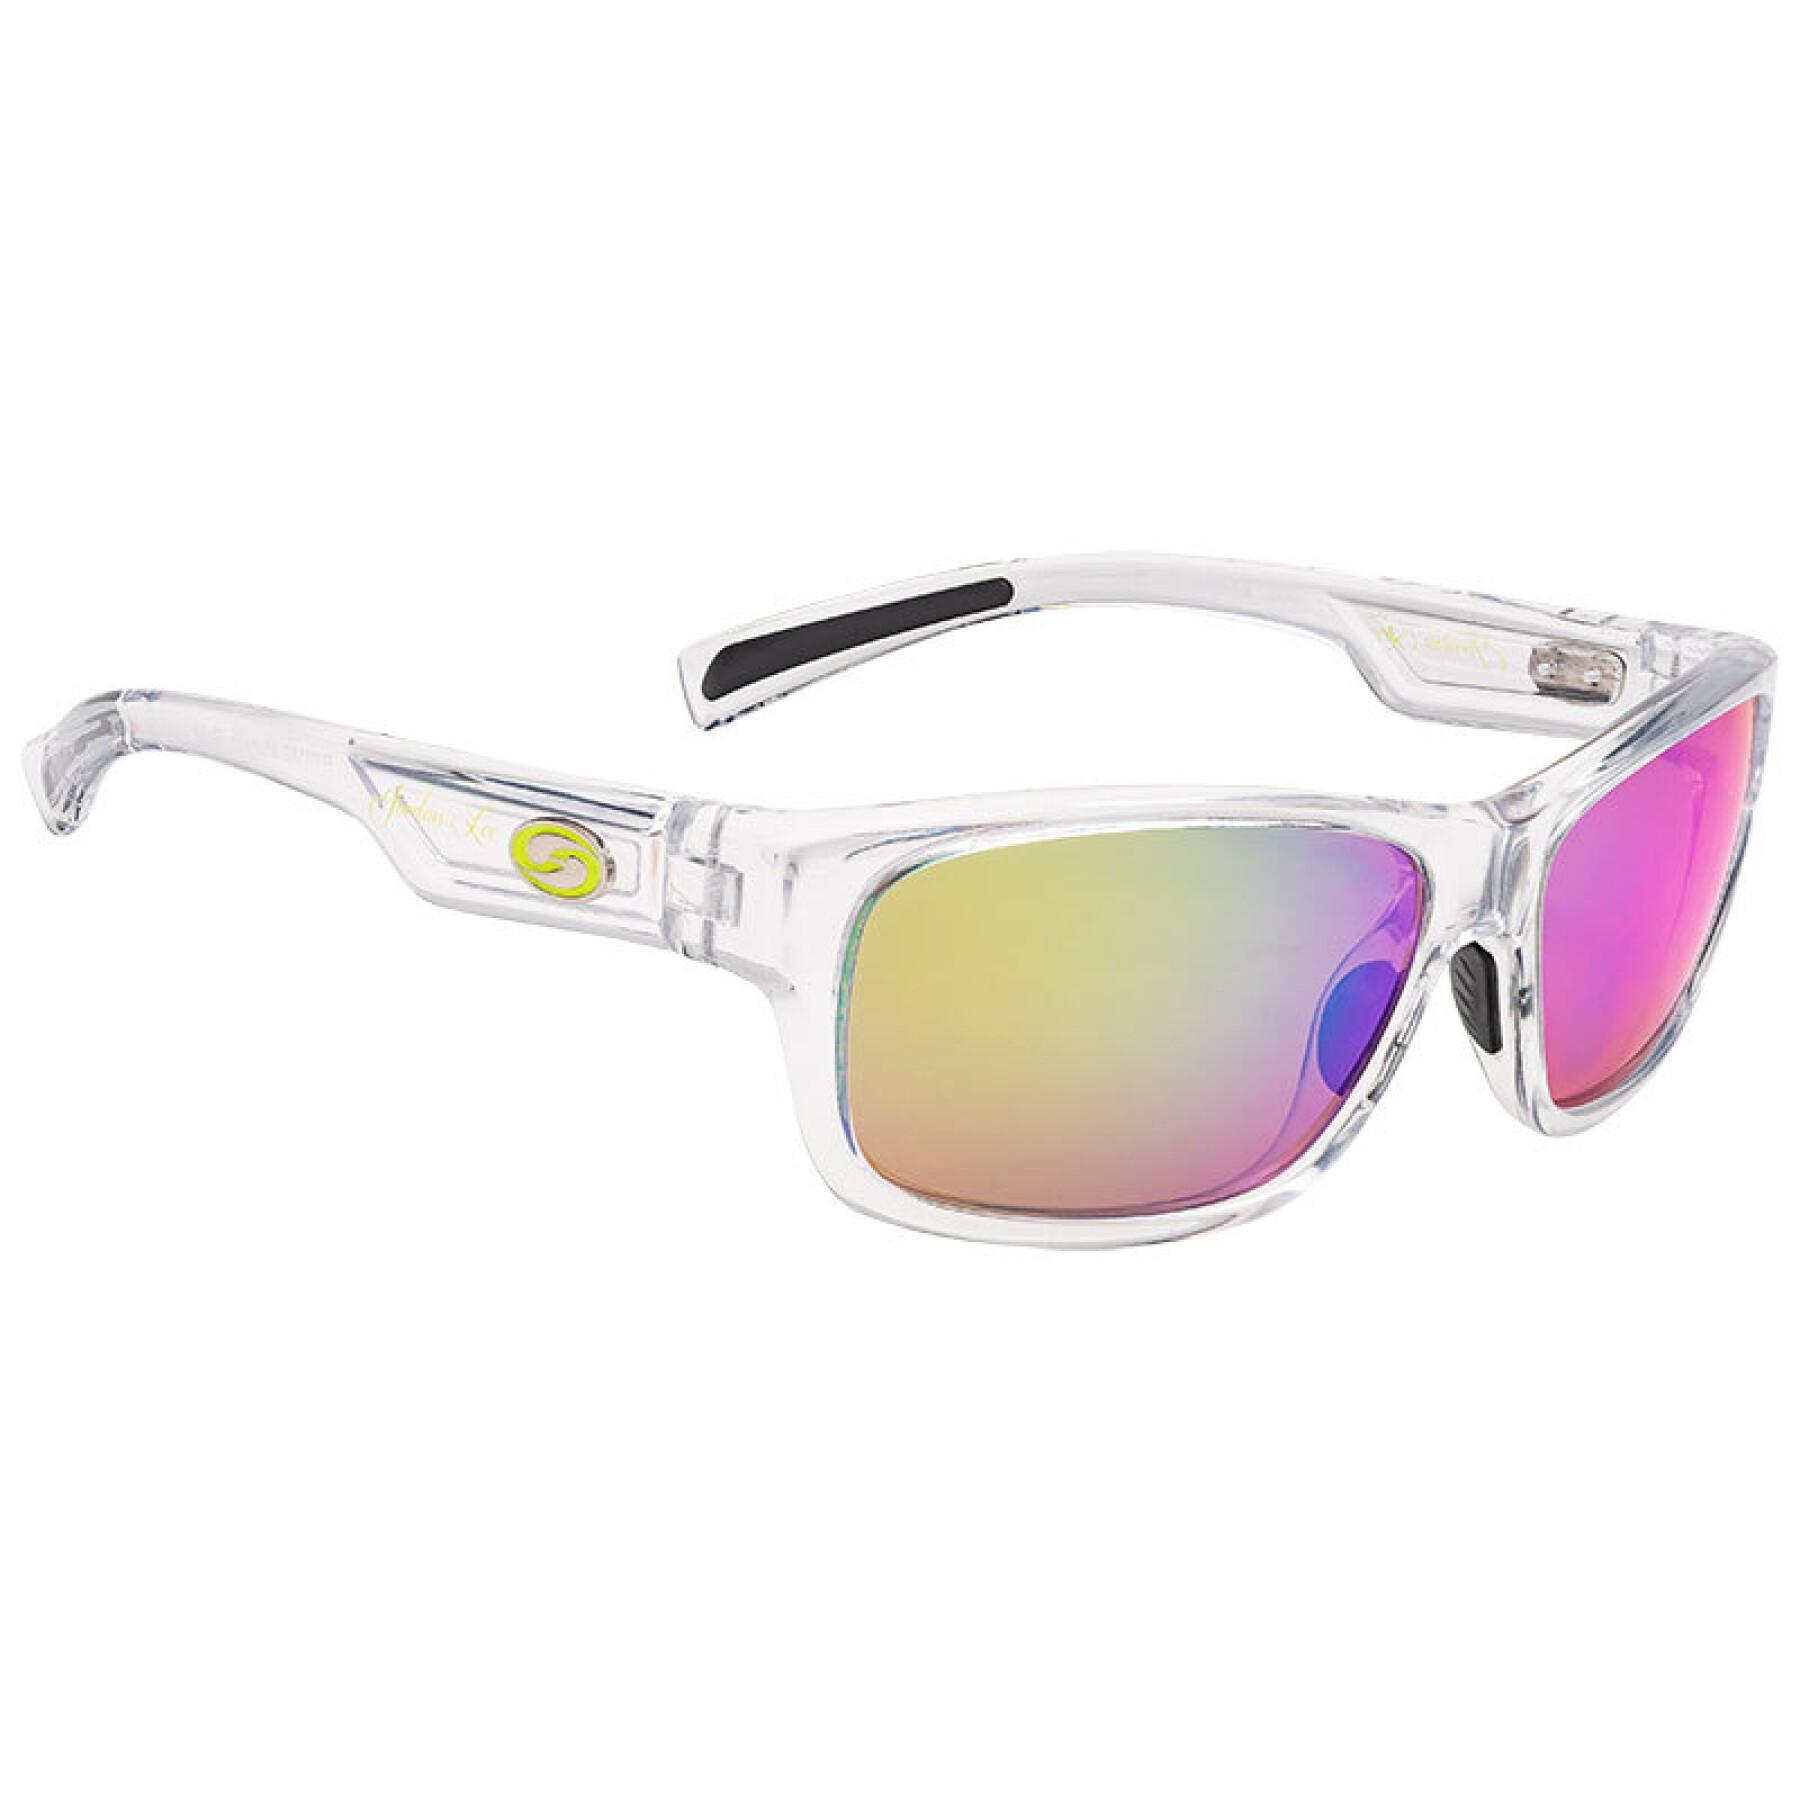 Sunglasses Strike King Pro Crystal Clear